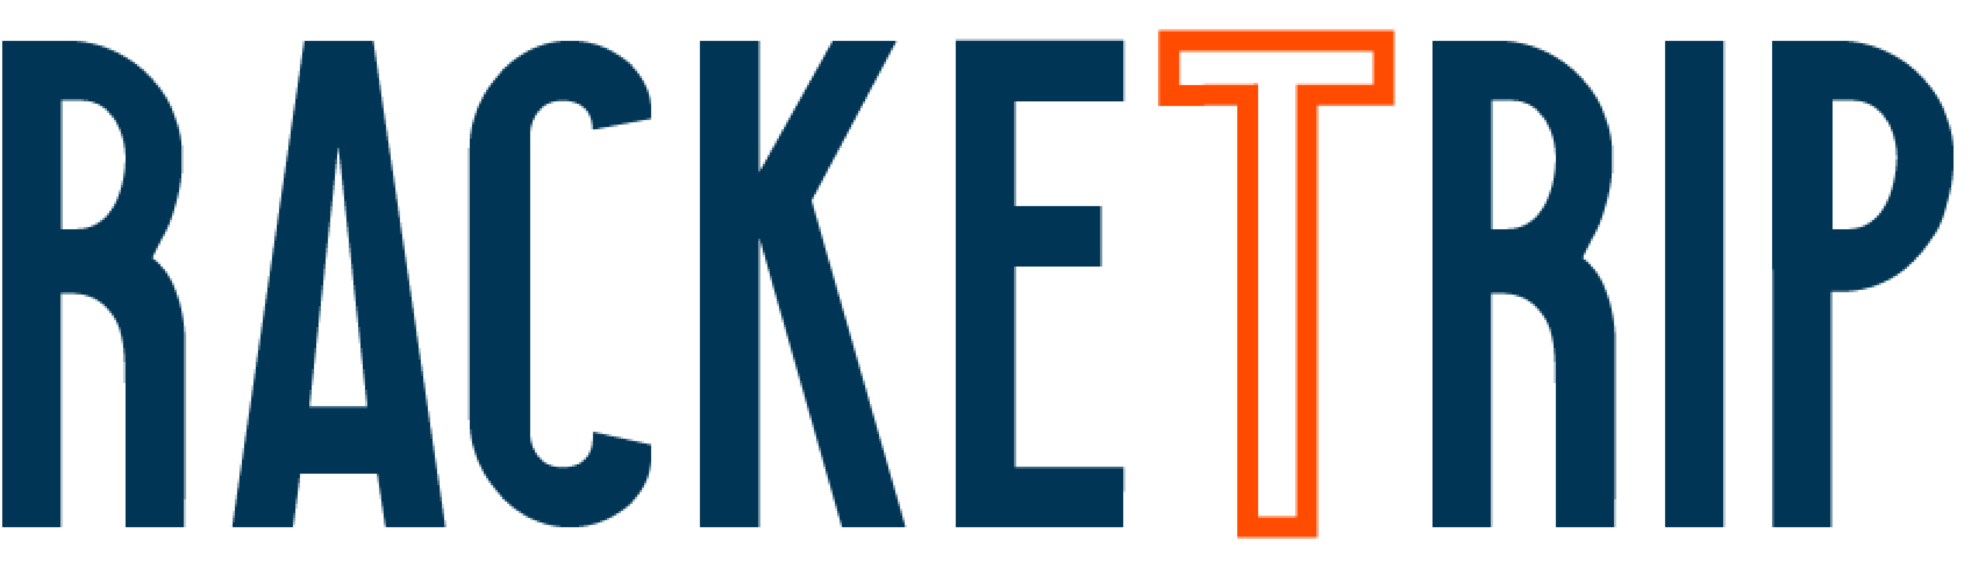 logo-racketrip-blue